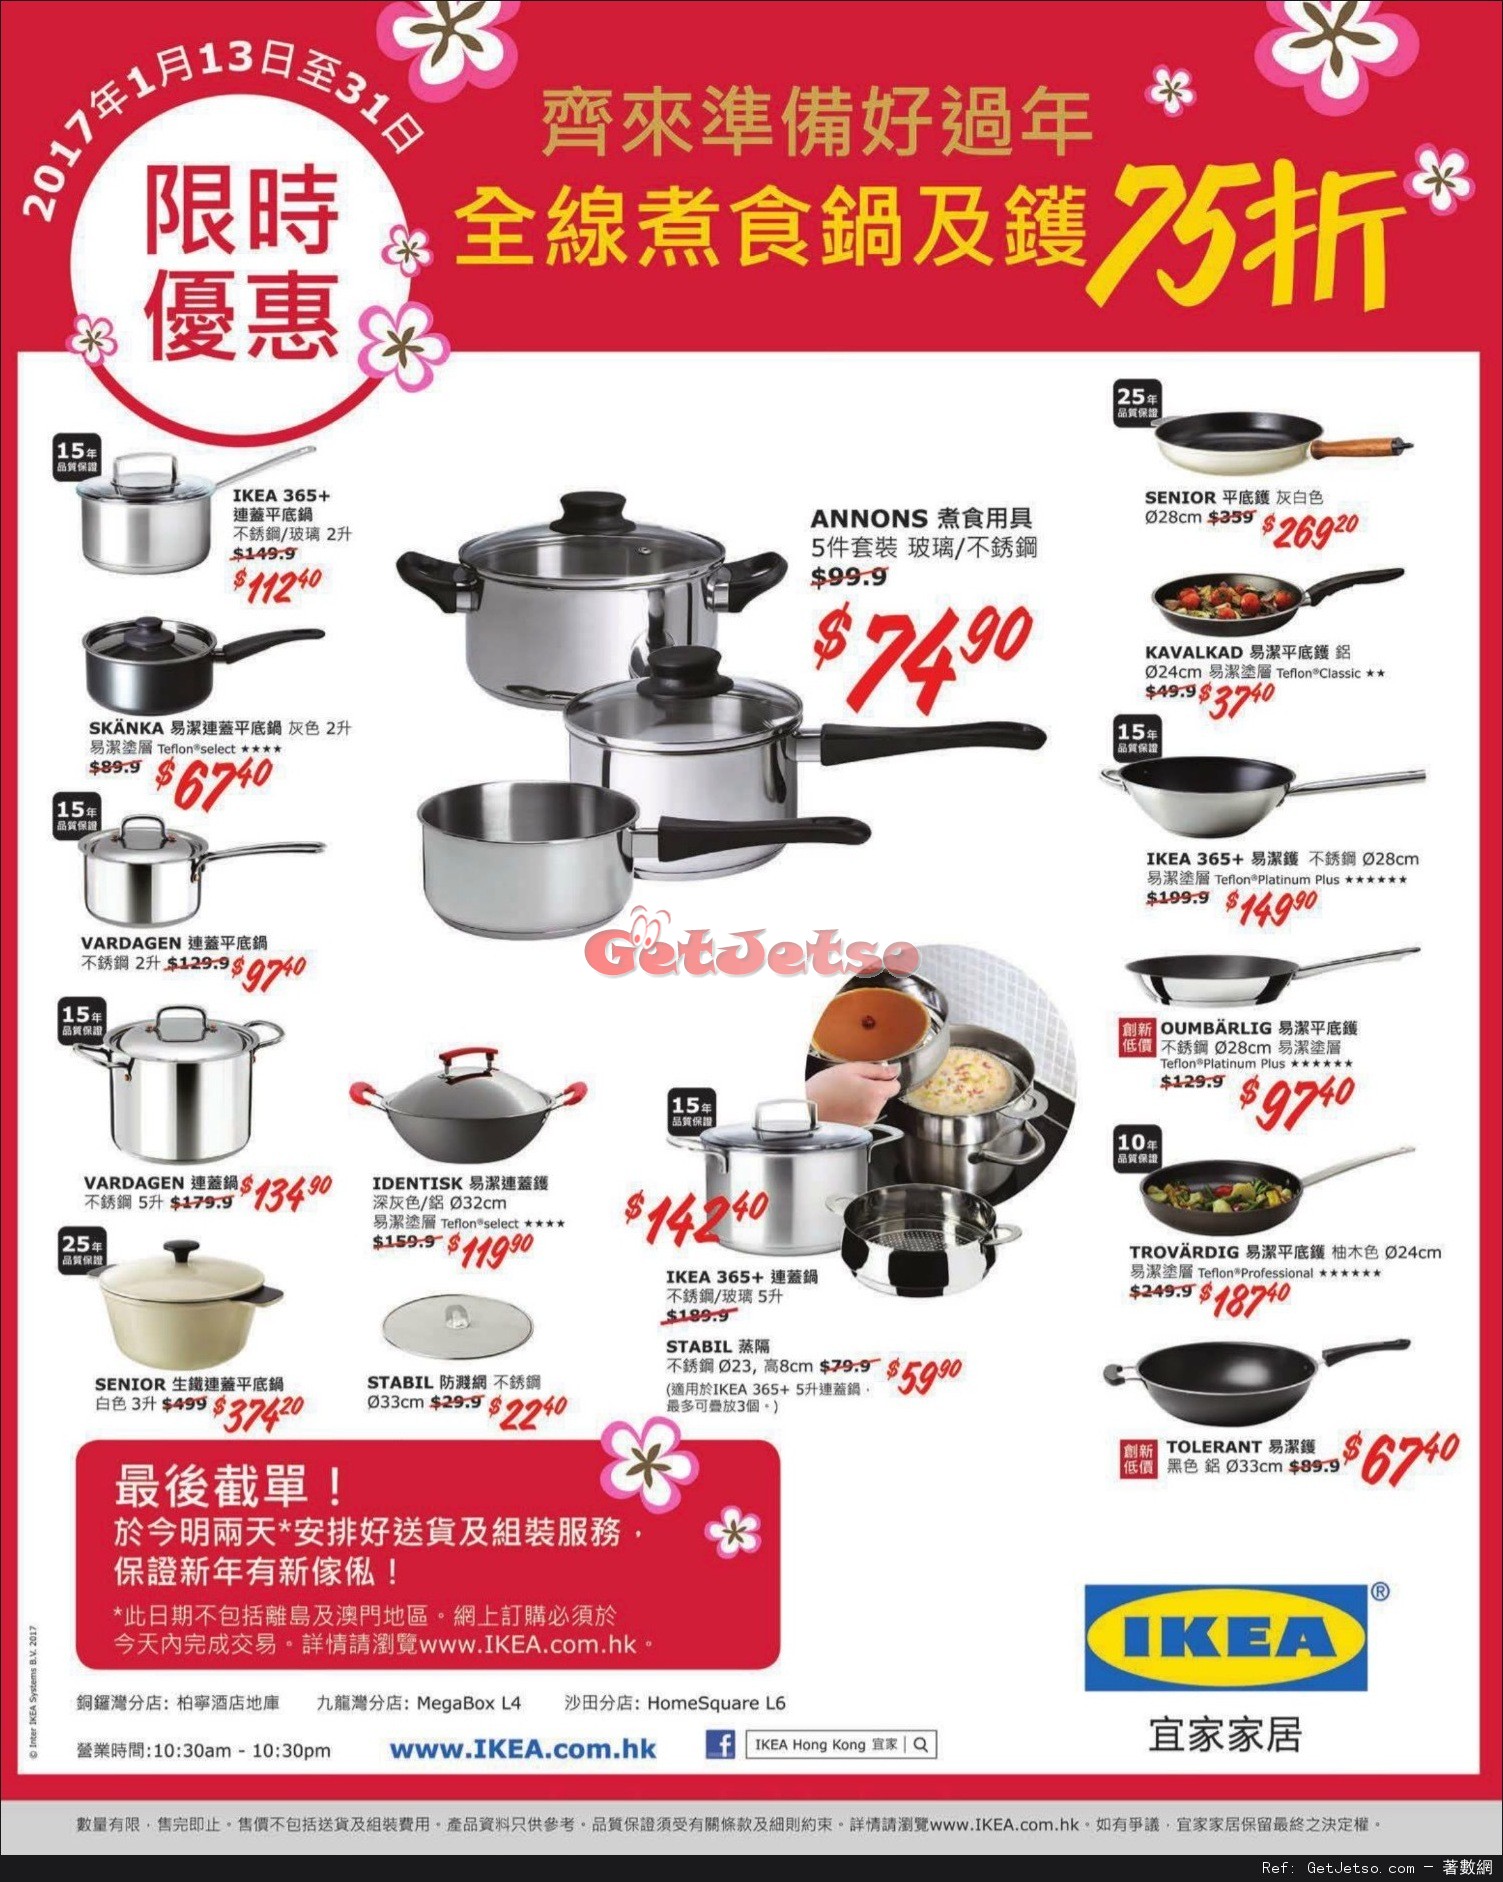 IKEA 宜家家居全線煮食鍋及鑊75折購物優惠(至17年1月31日)圖片1